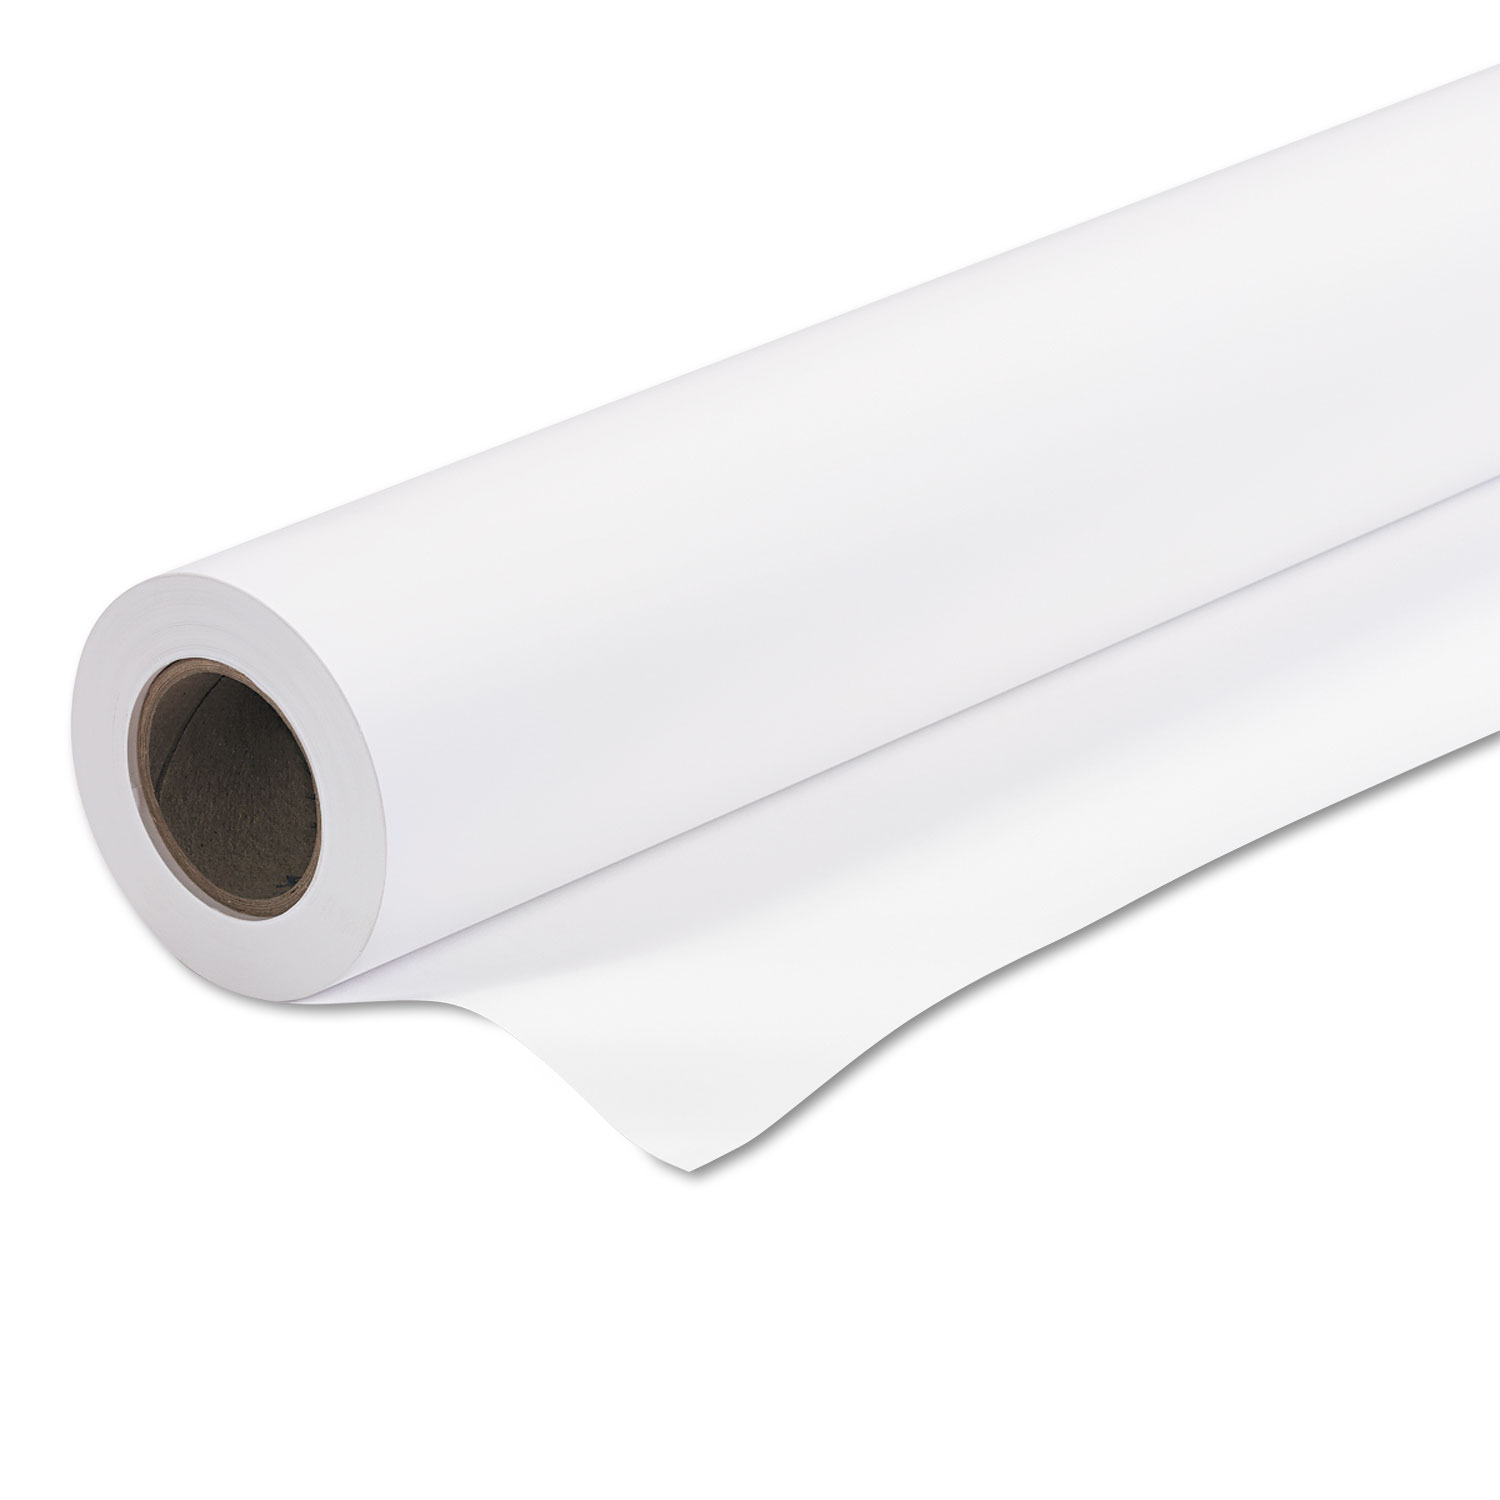  Iconex 45181 Amerigo Wide-Format Paper, 2 Core, 26 lb, 24 x 150 ft, Coated White (ICX90750214) 